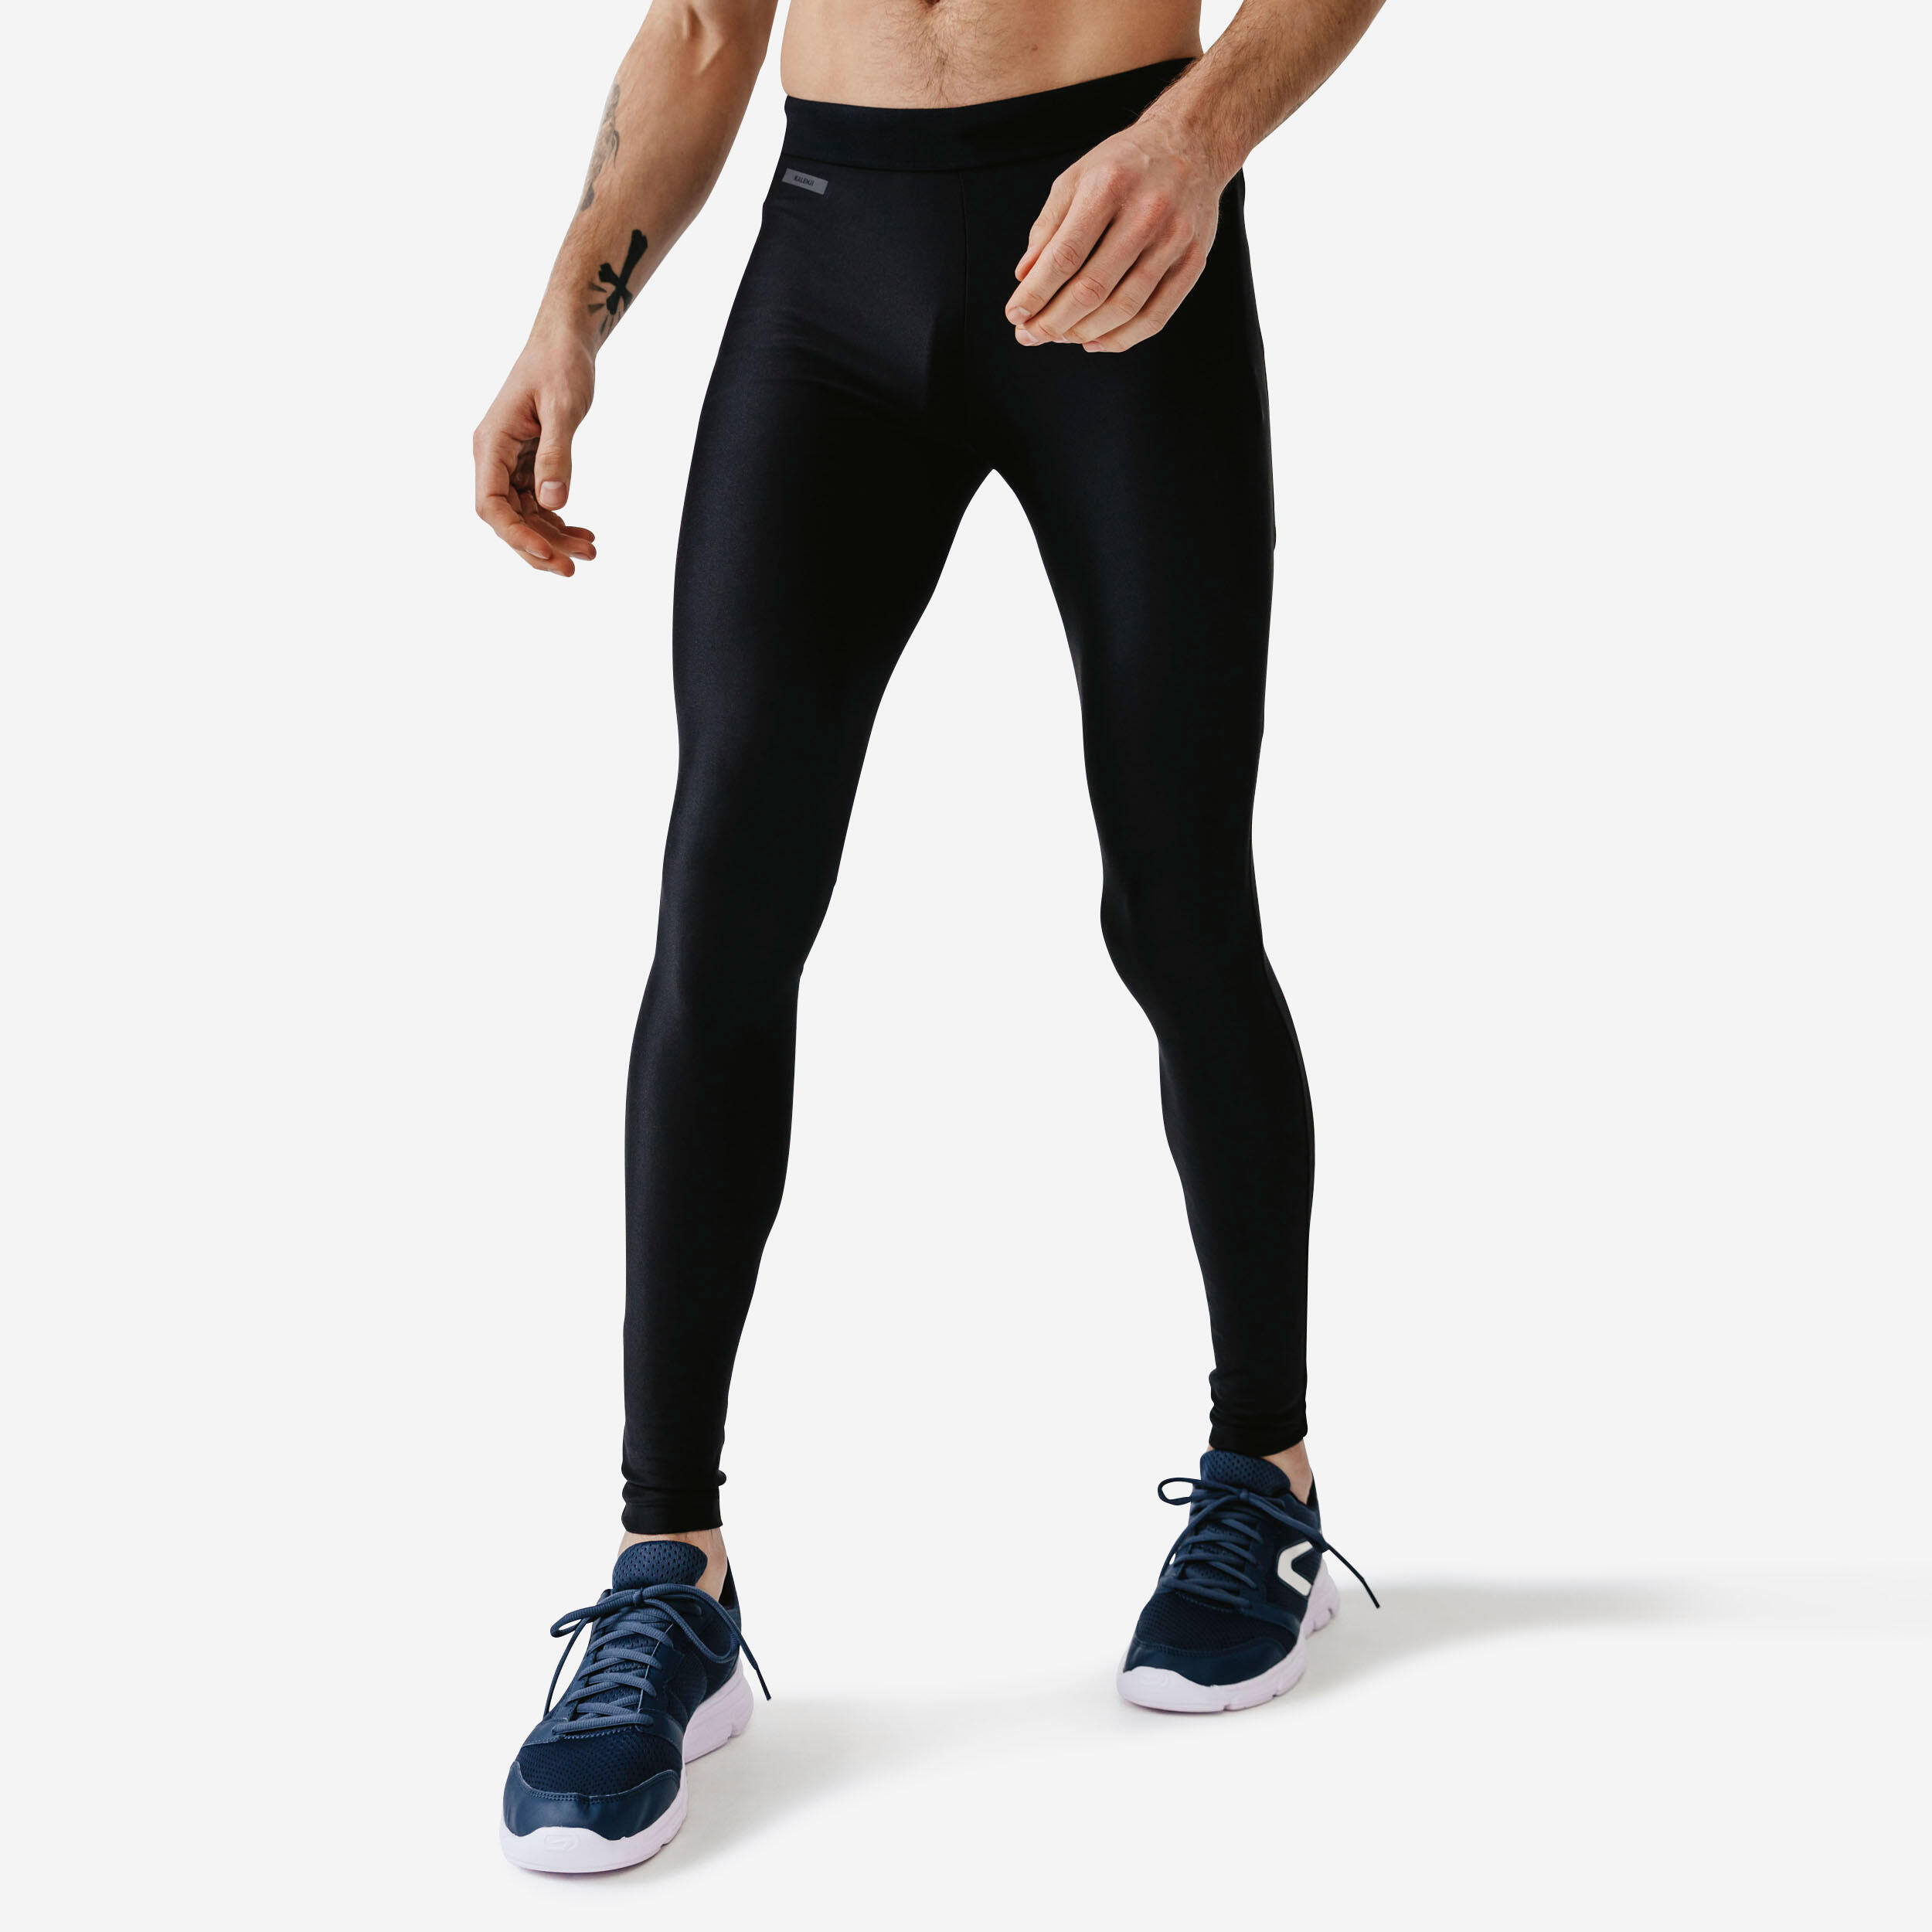 Men's Compression Base Layer Pants Long Tight Under Skin Bottom